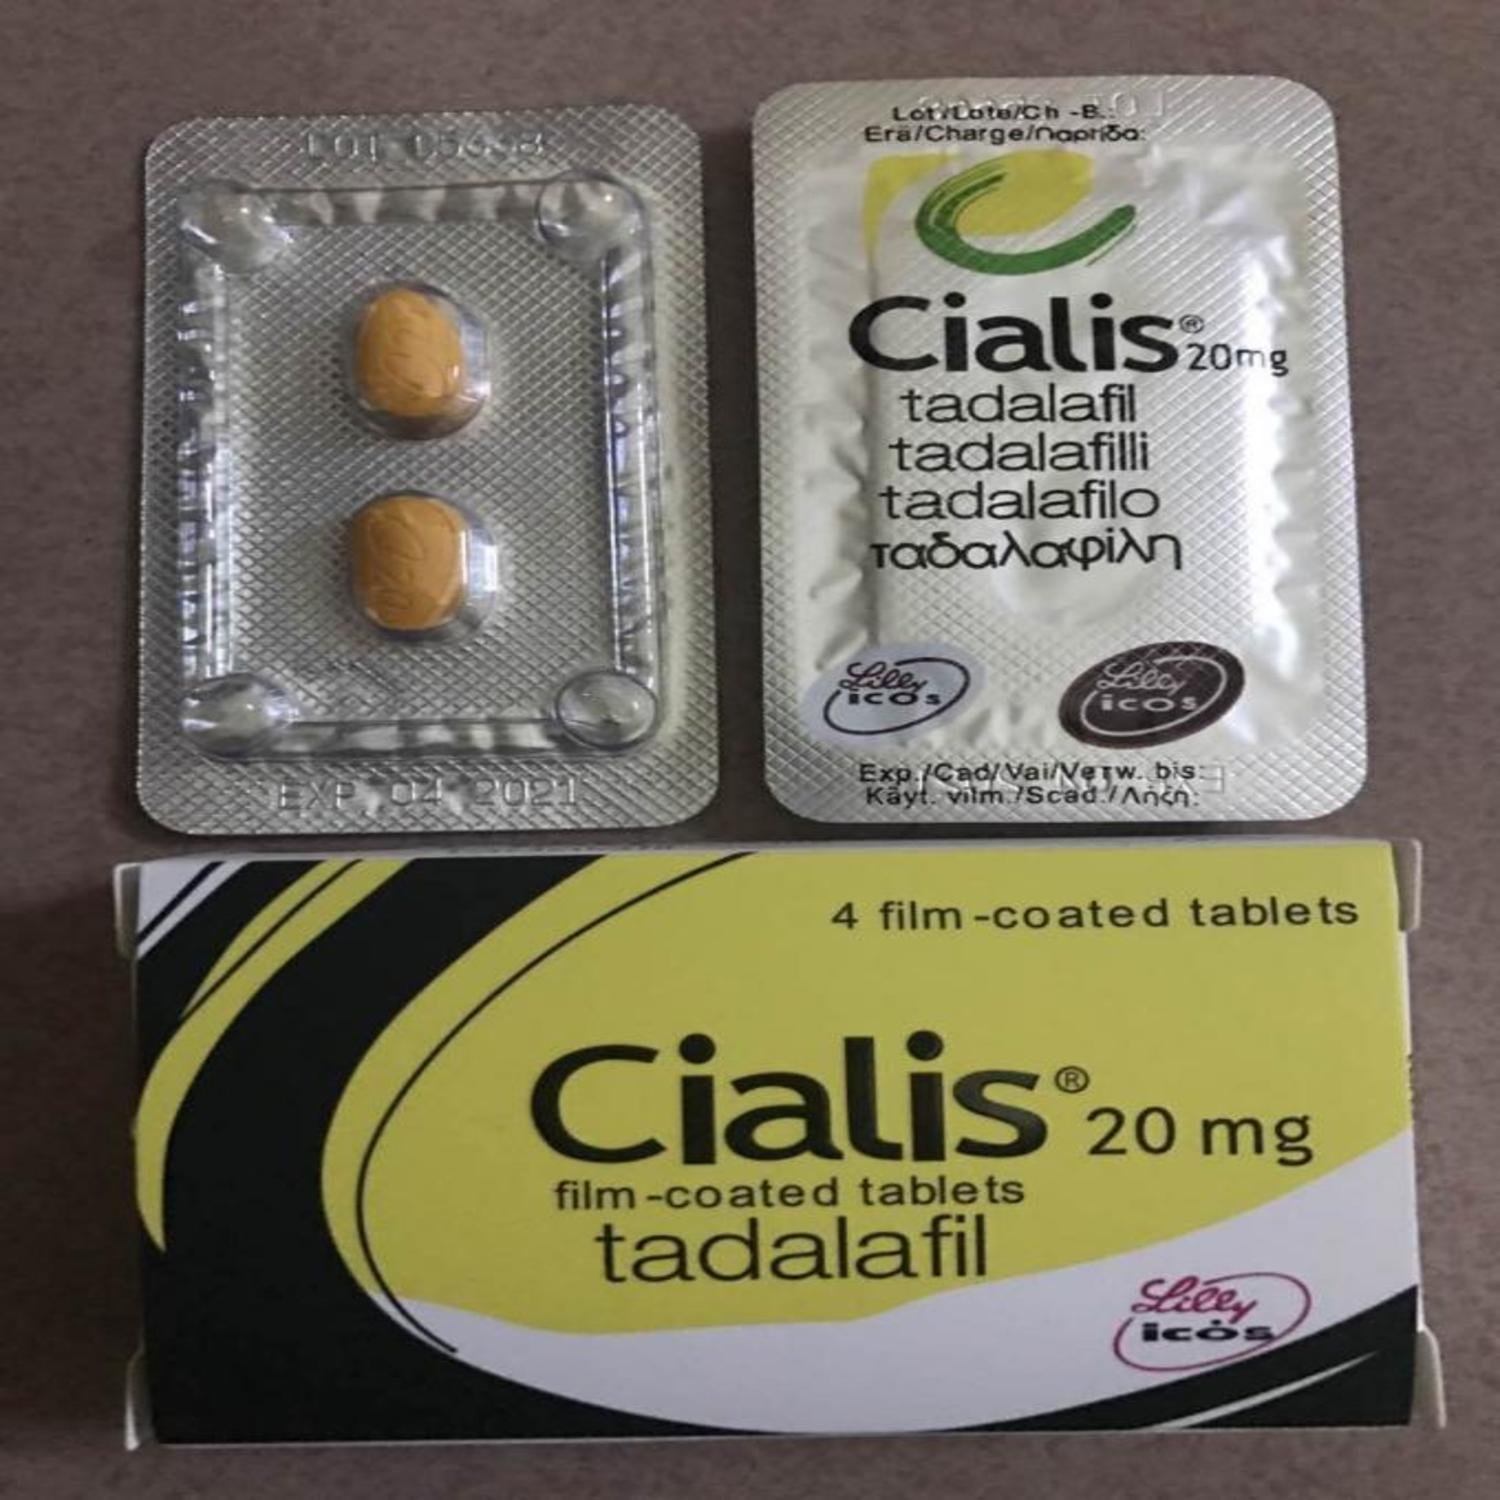 Cialis Male Sexual Enhancement Pills